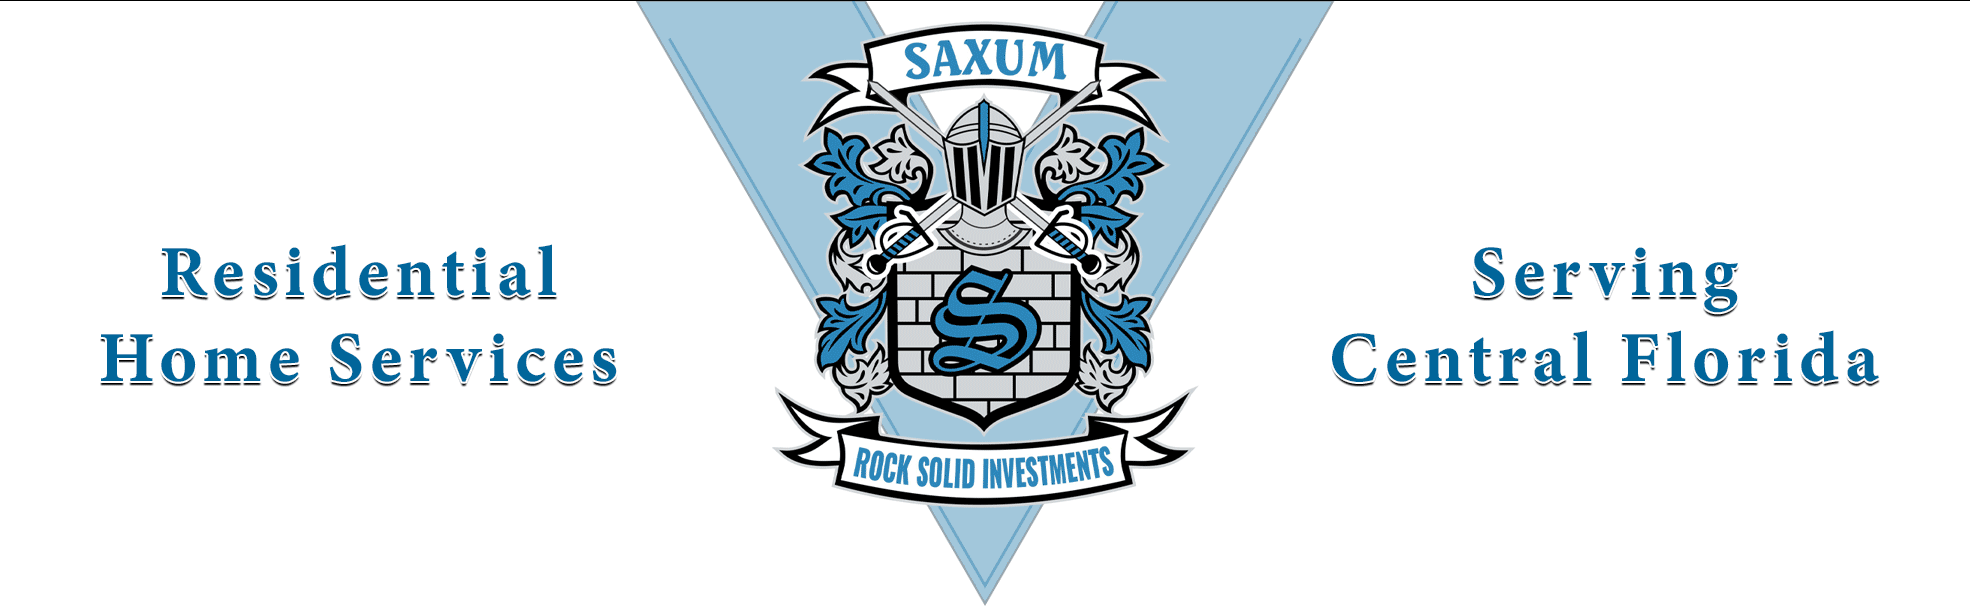 Saxum Rock Solid Investments